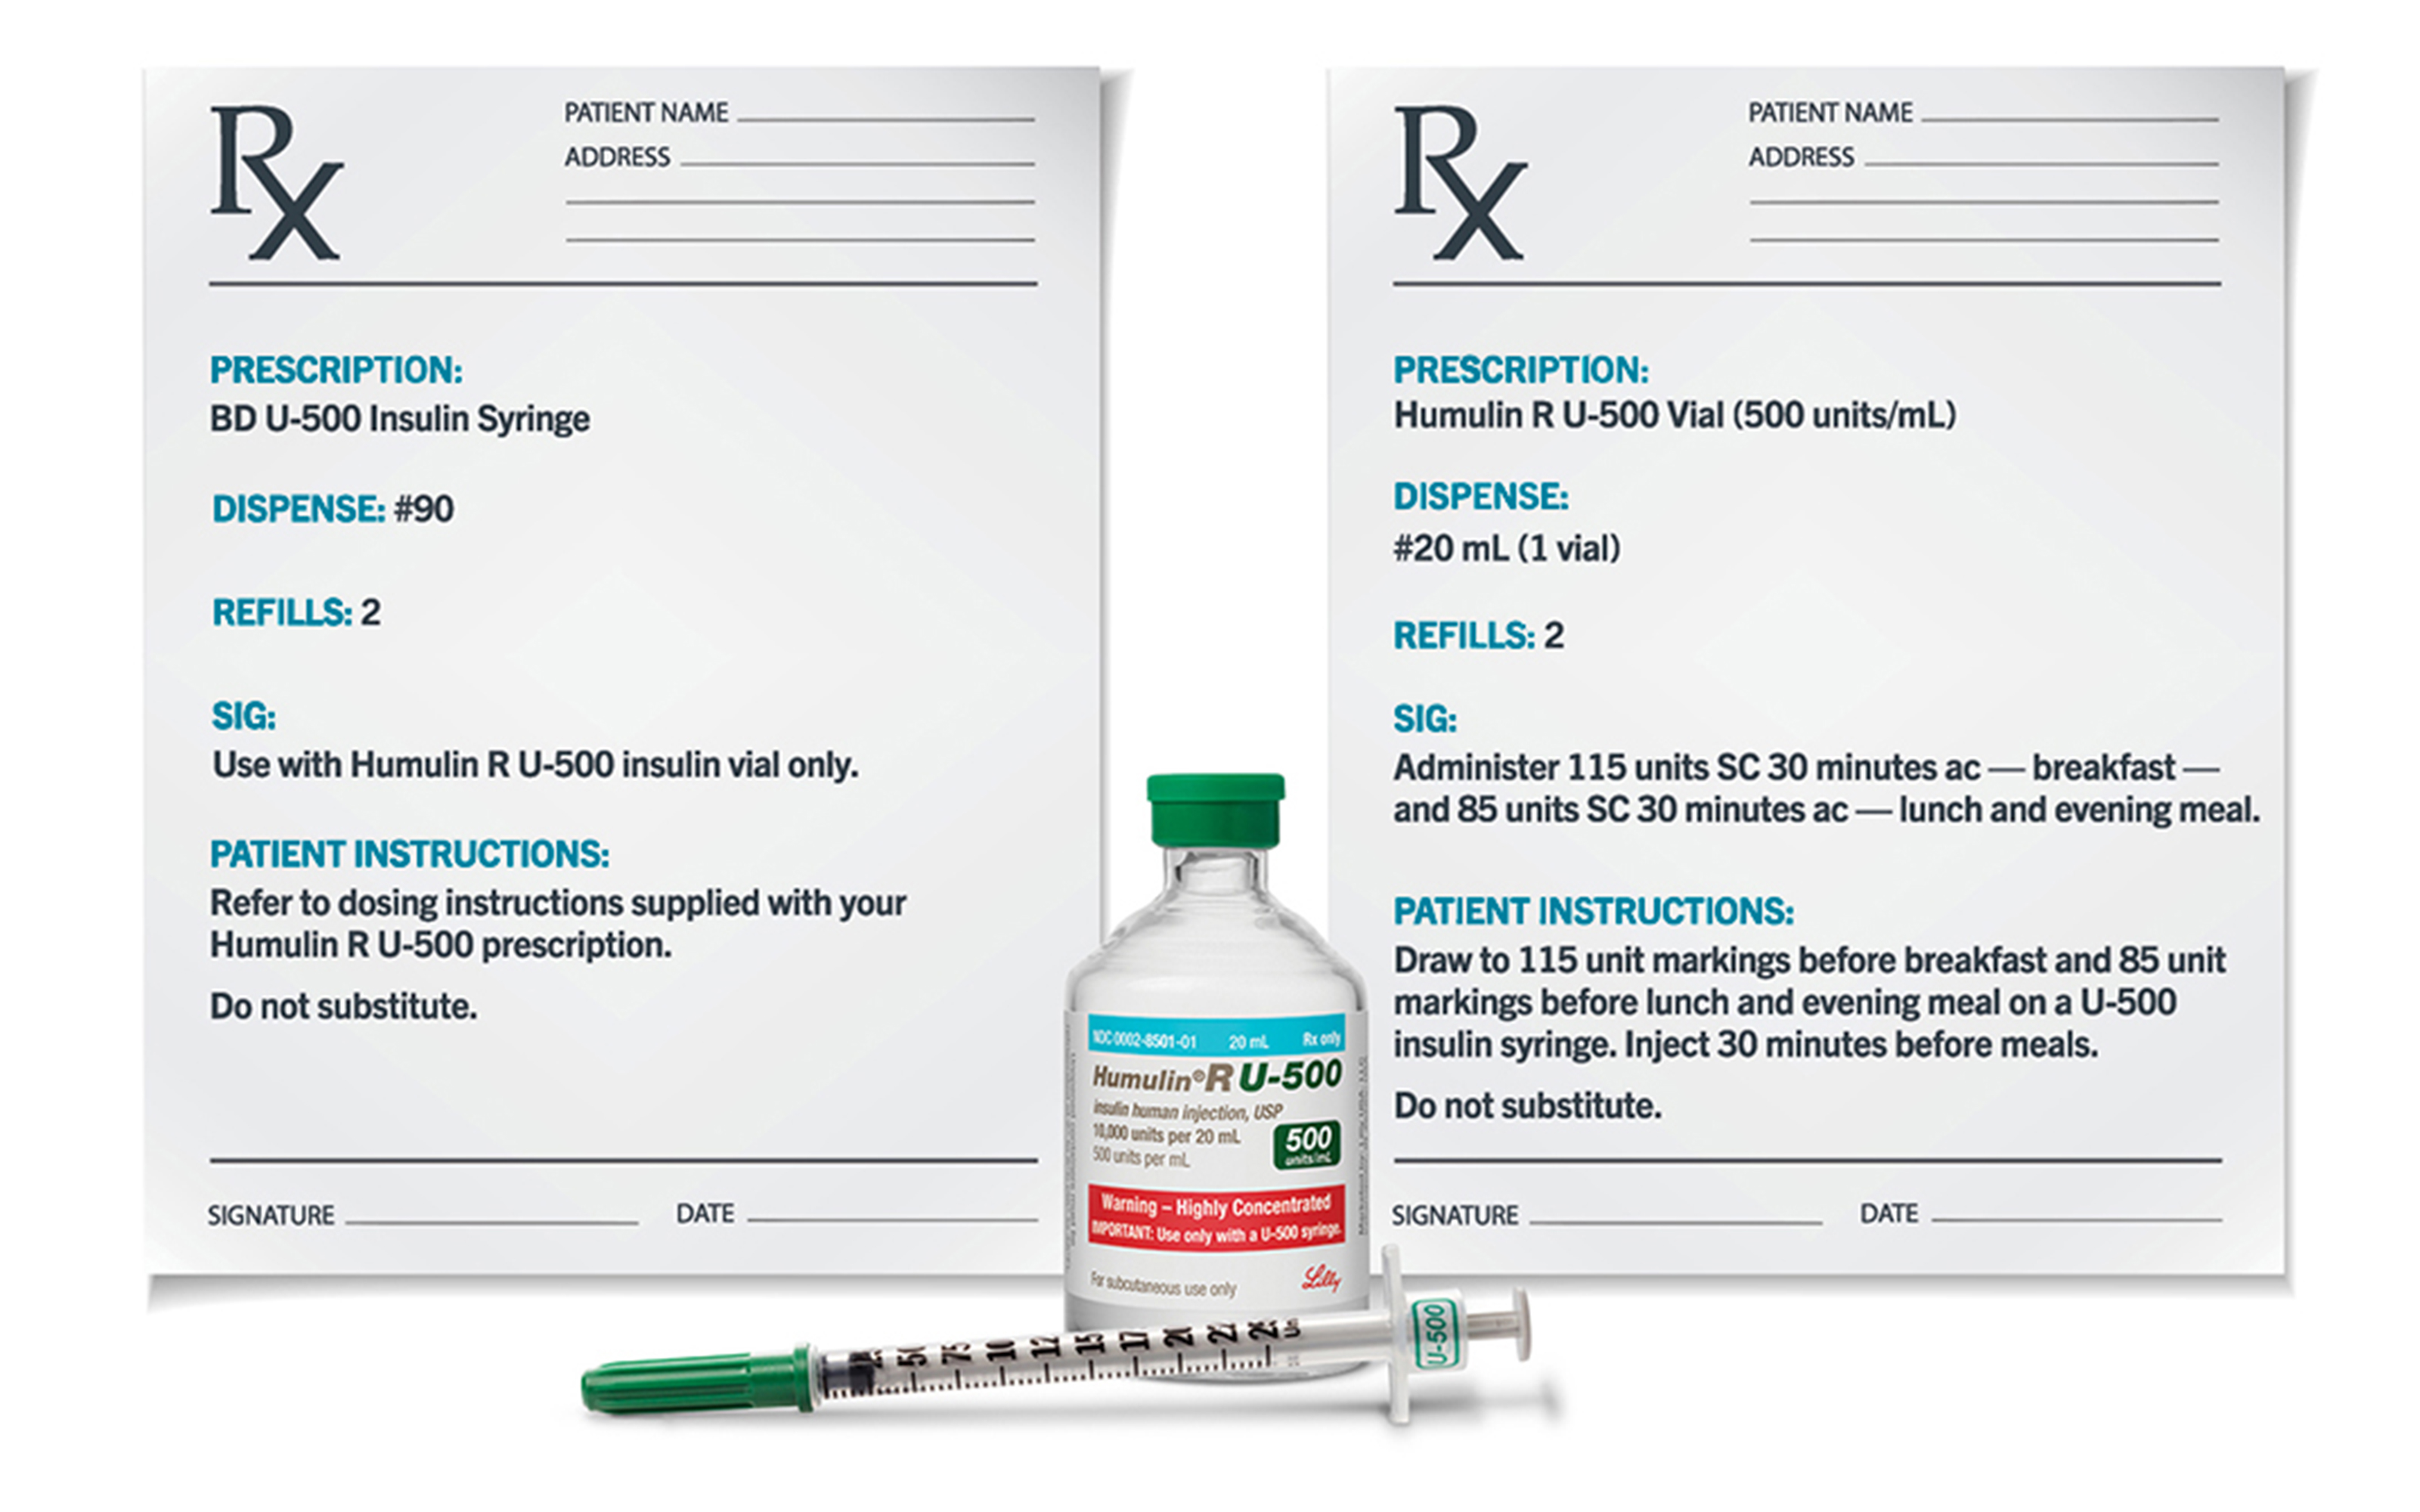 Humulin R U-500 prescription pad with vial and syringe